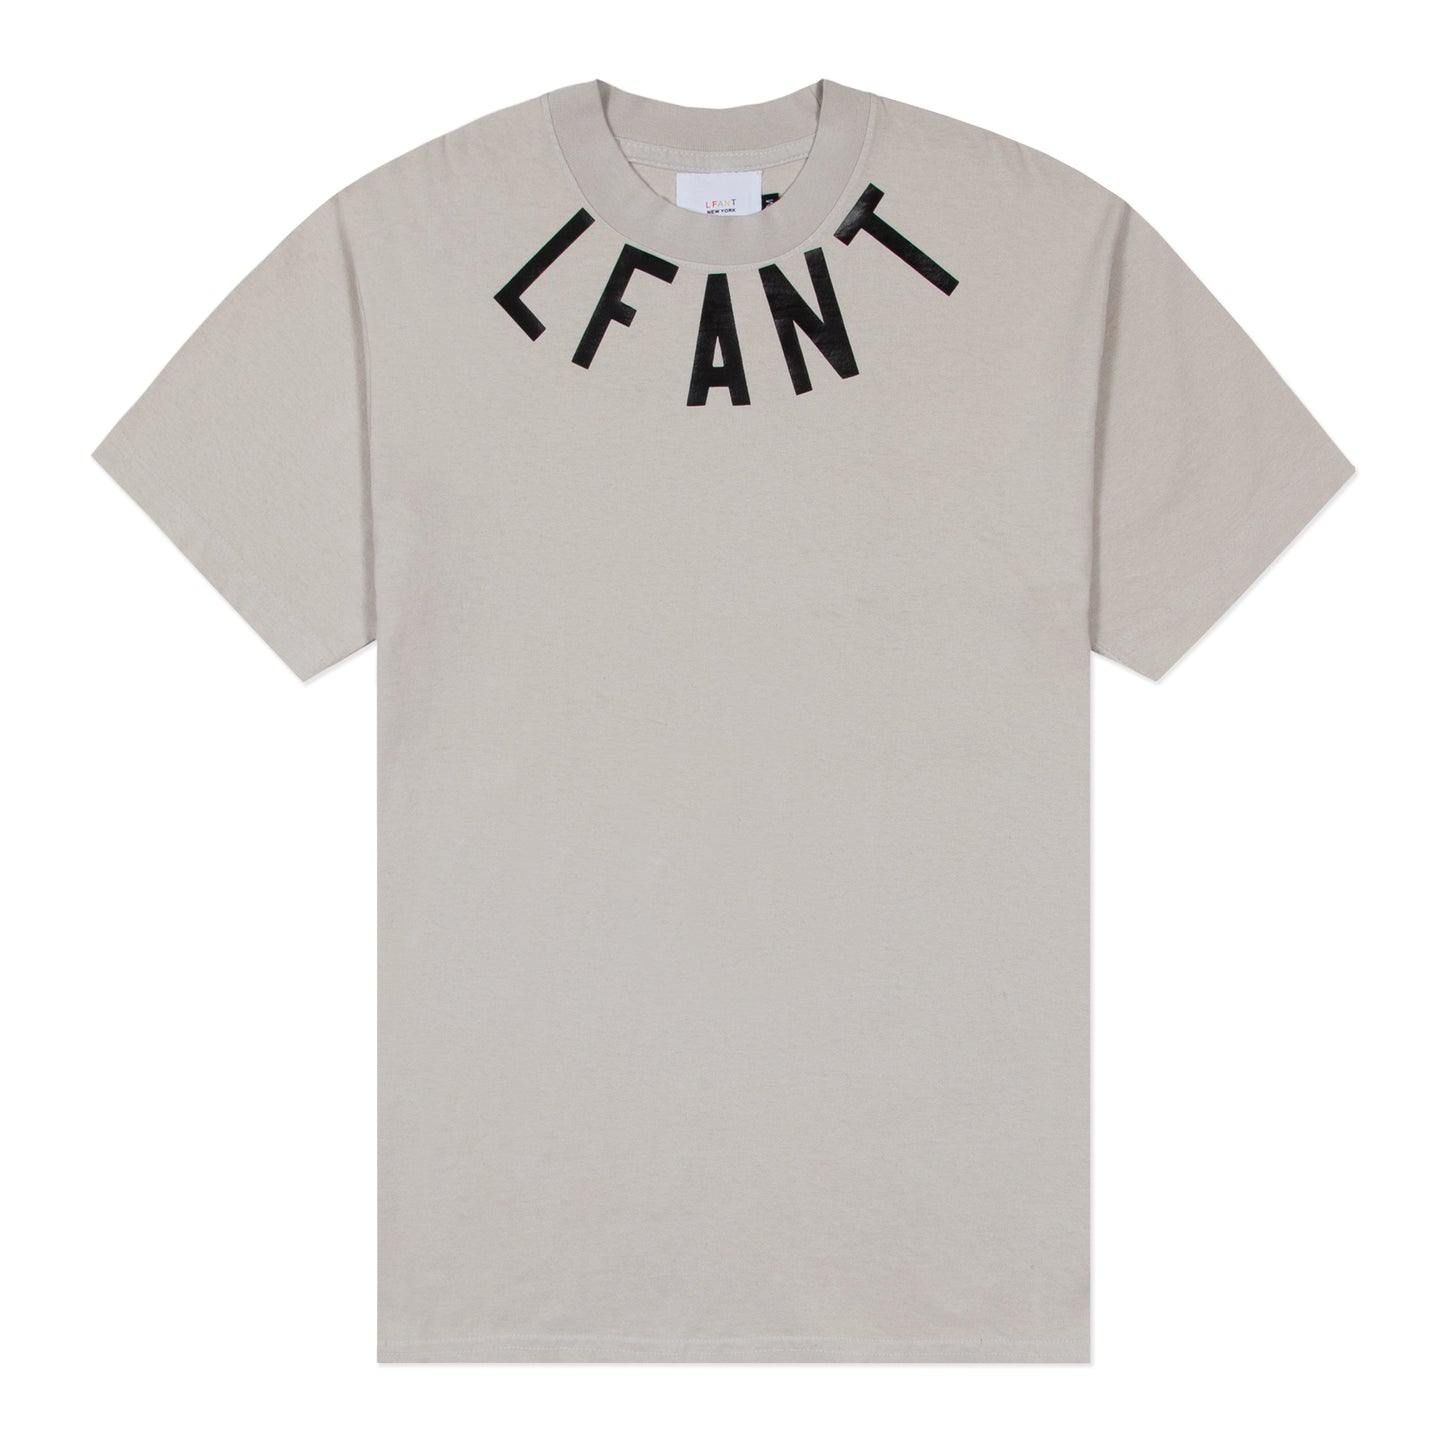 Grey t-shirt with "LFANT" printed around the collar.